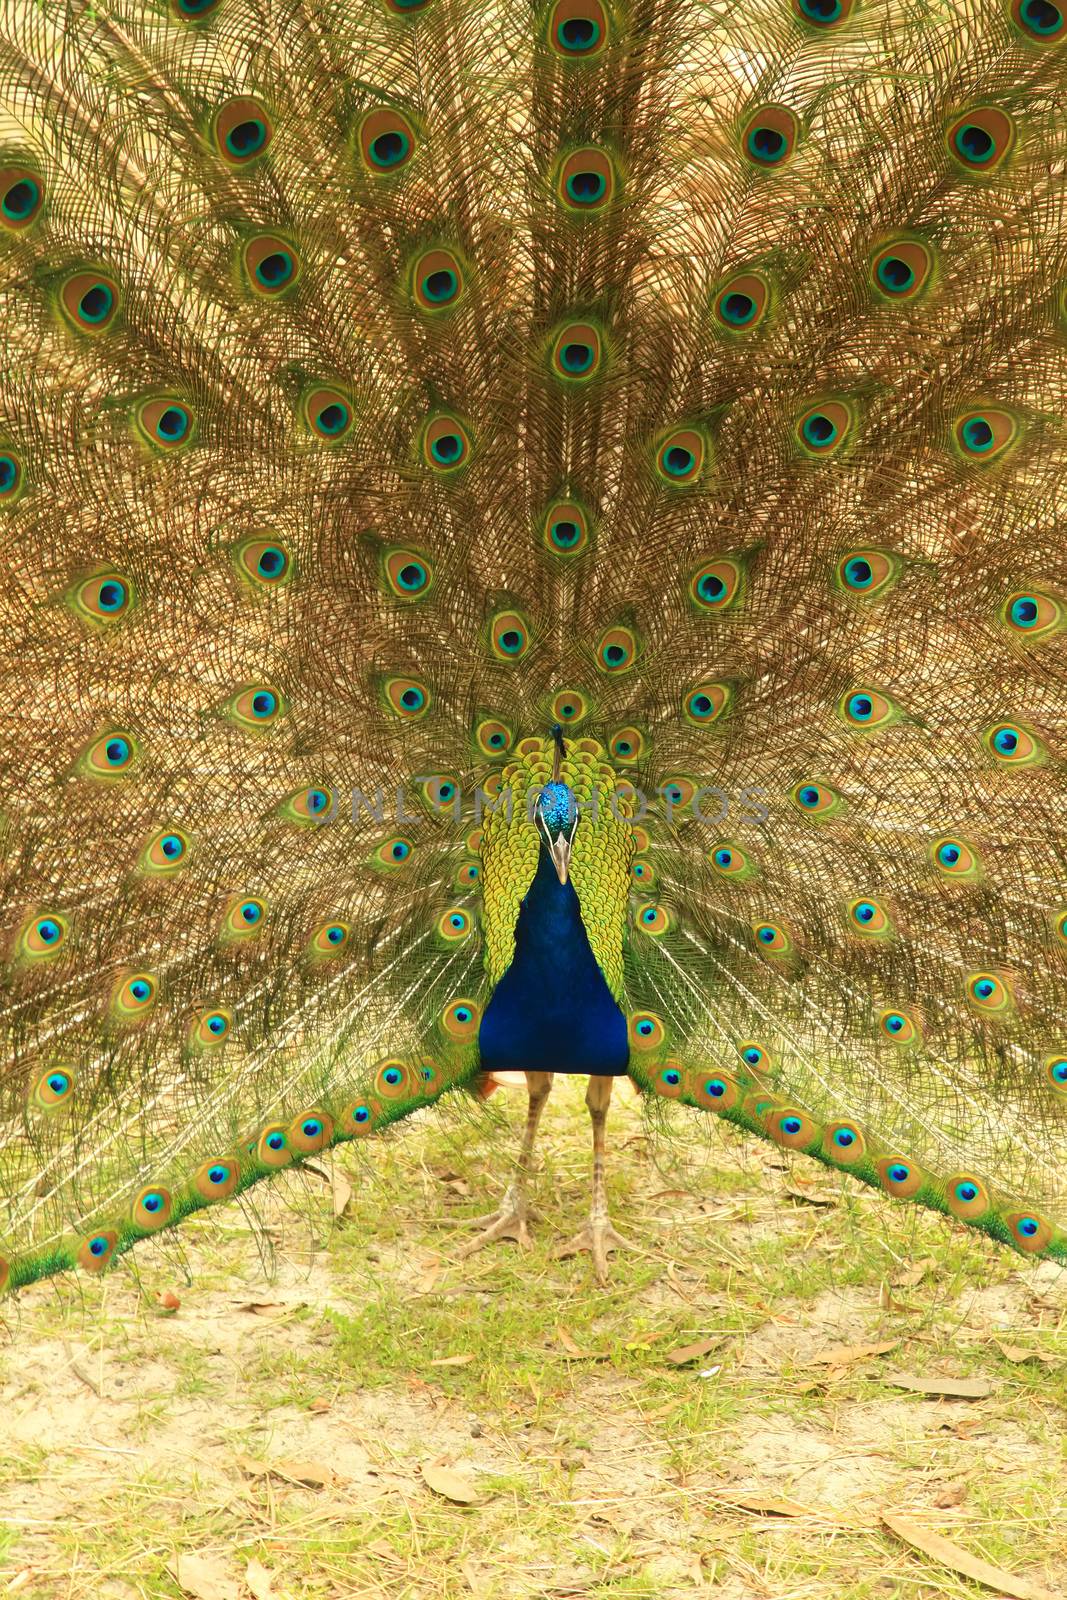 Peacock by kentoh